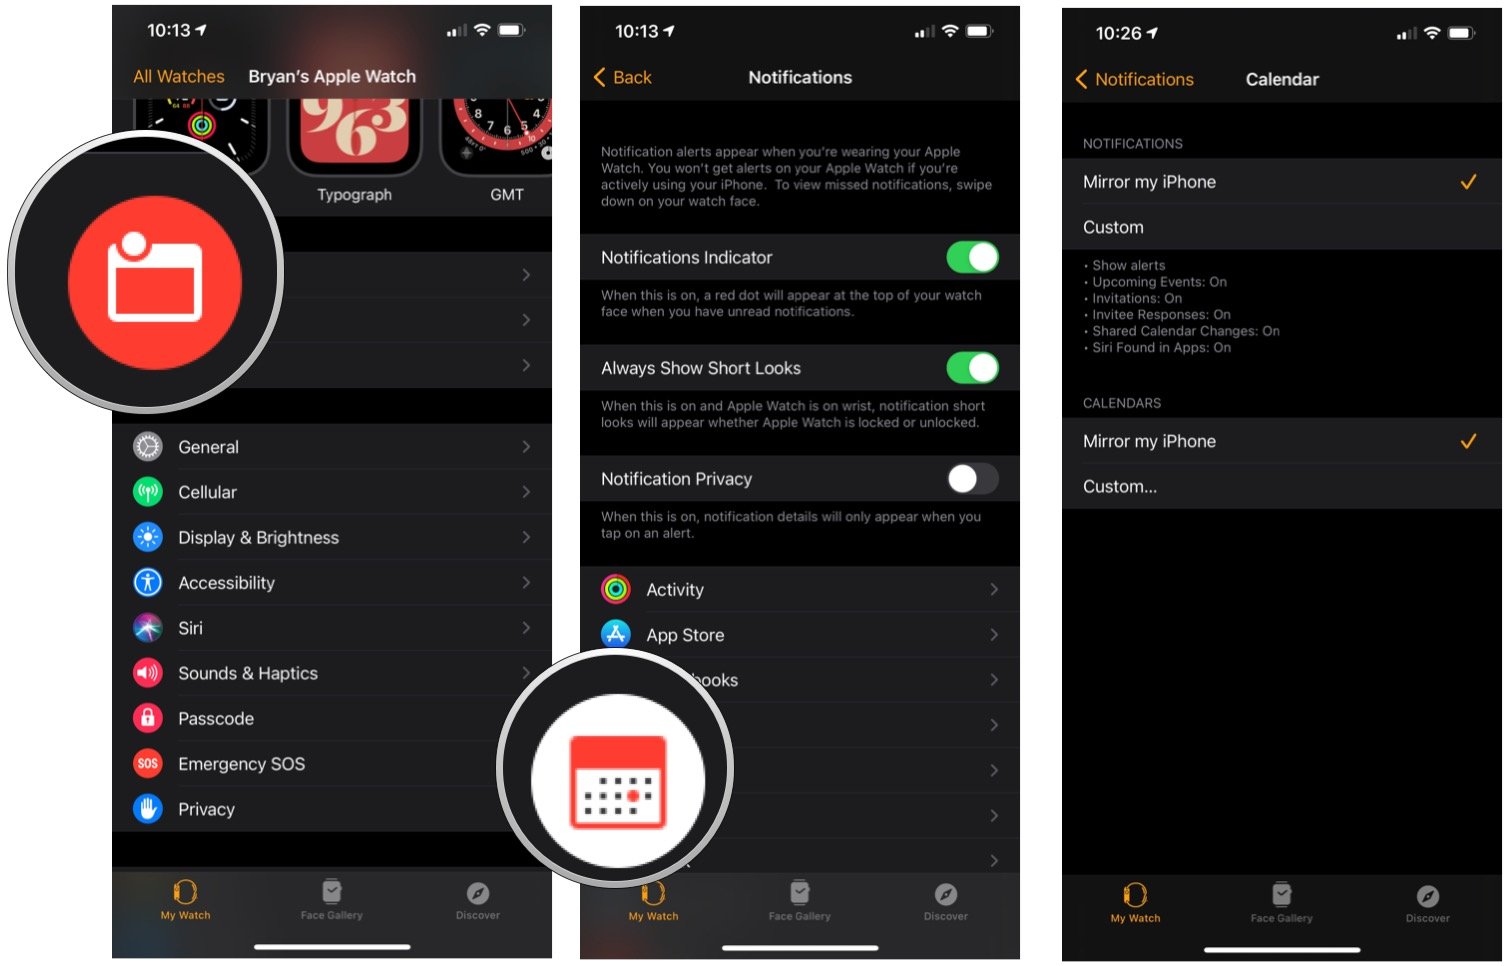 To customize Calendar notifications, launch the Apple Watch app, choose Notifications, then Calendar. Tap Custom. 